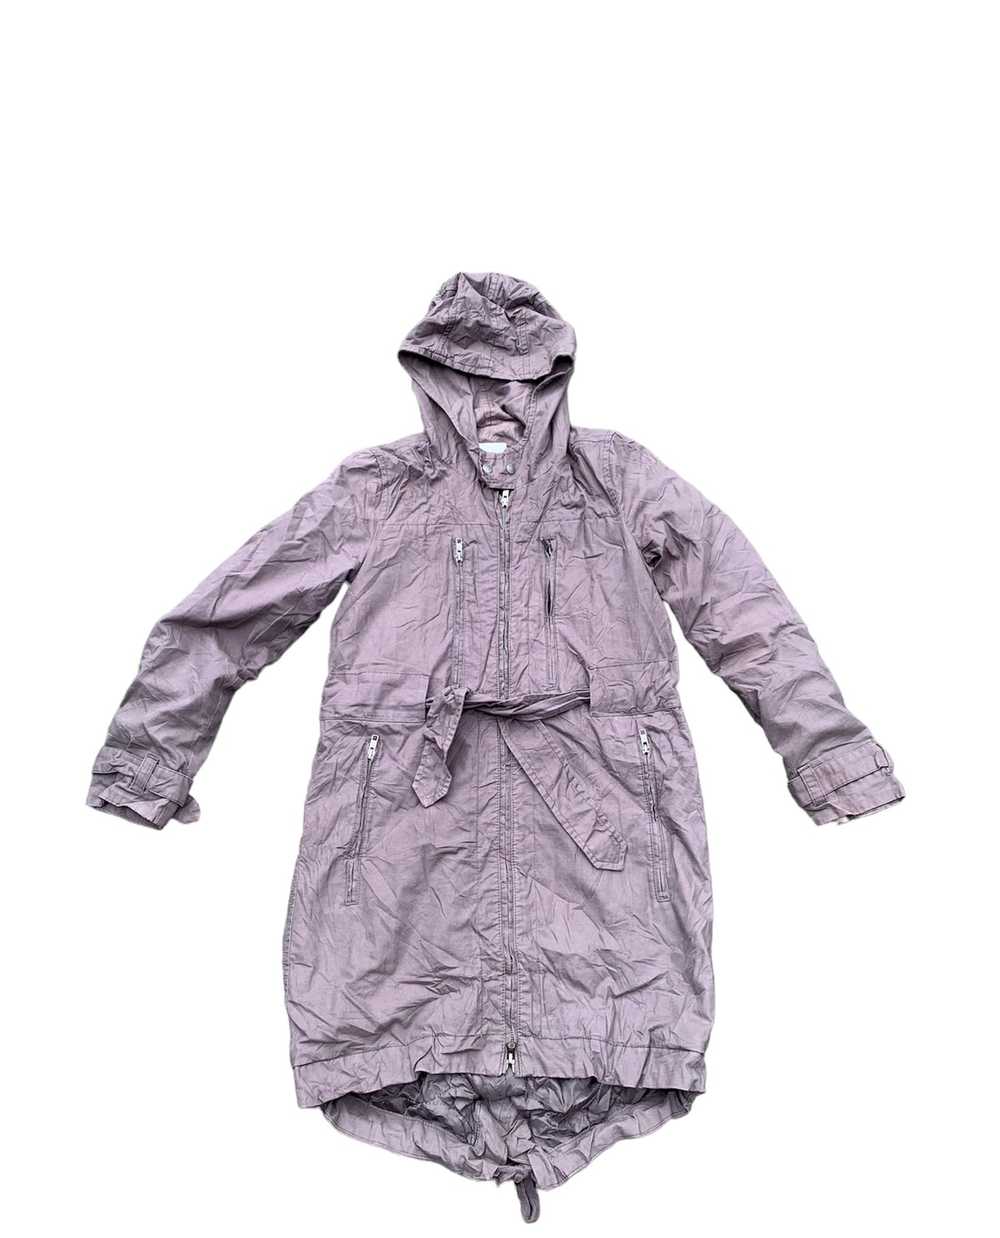 Diesel jackets full zipper nice design - image 1